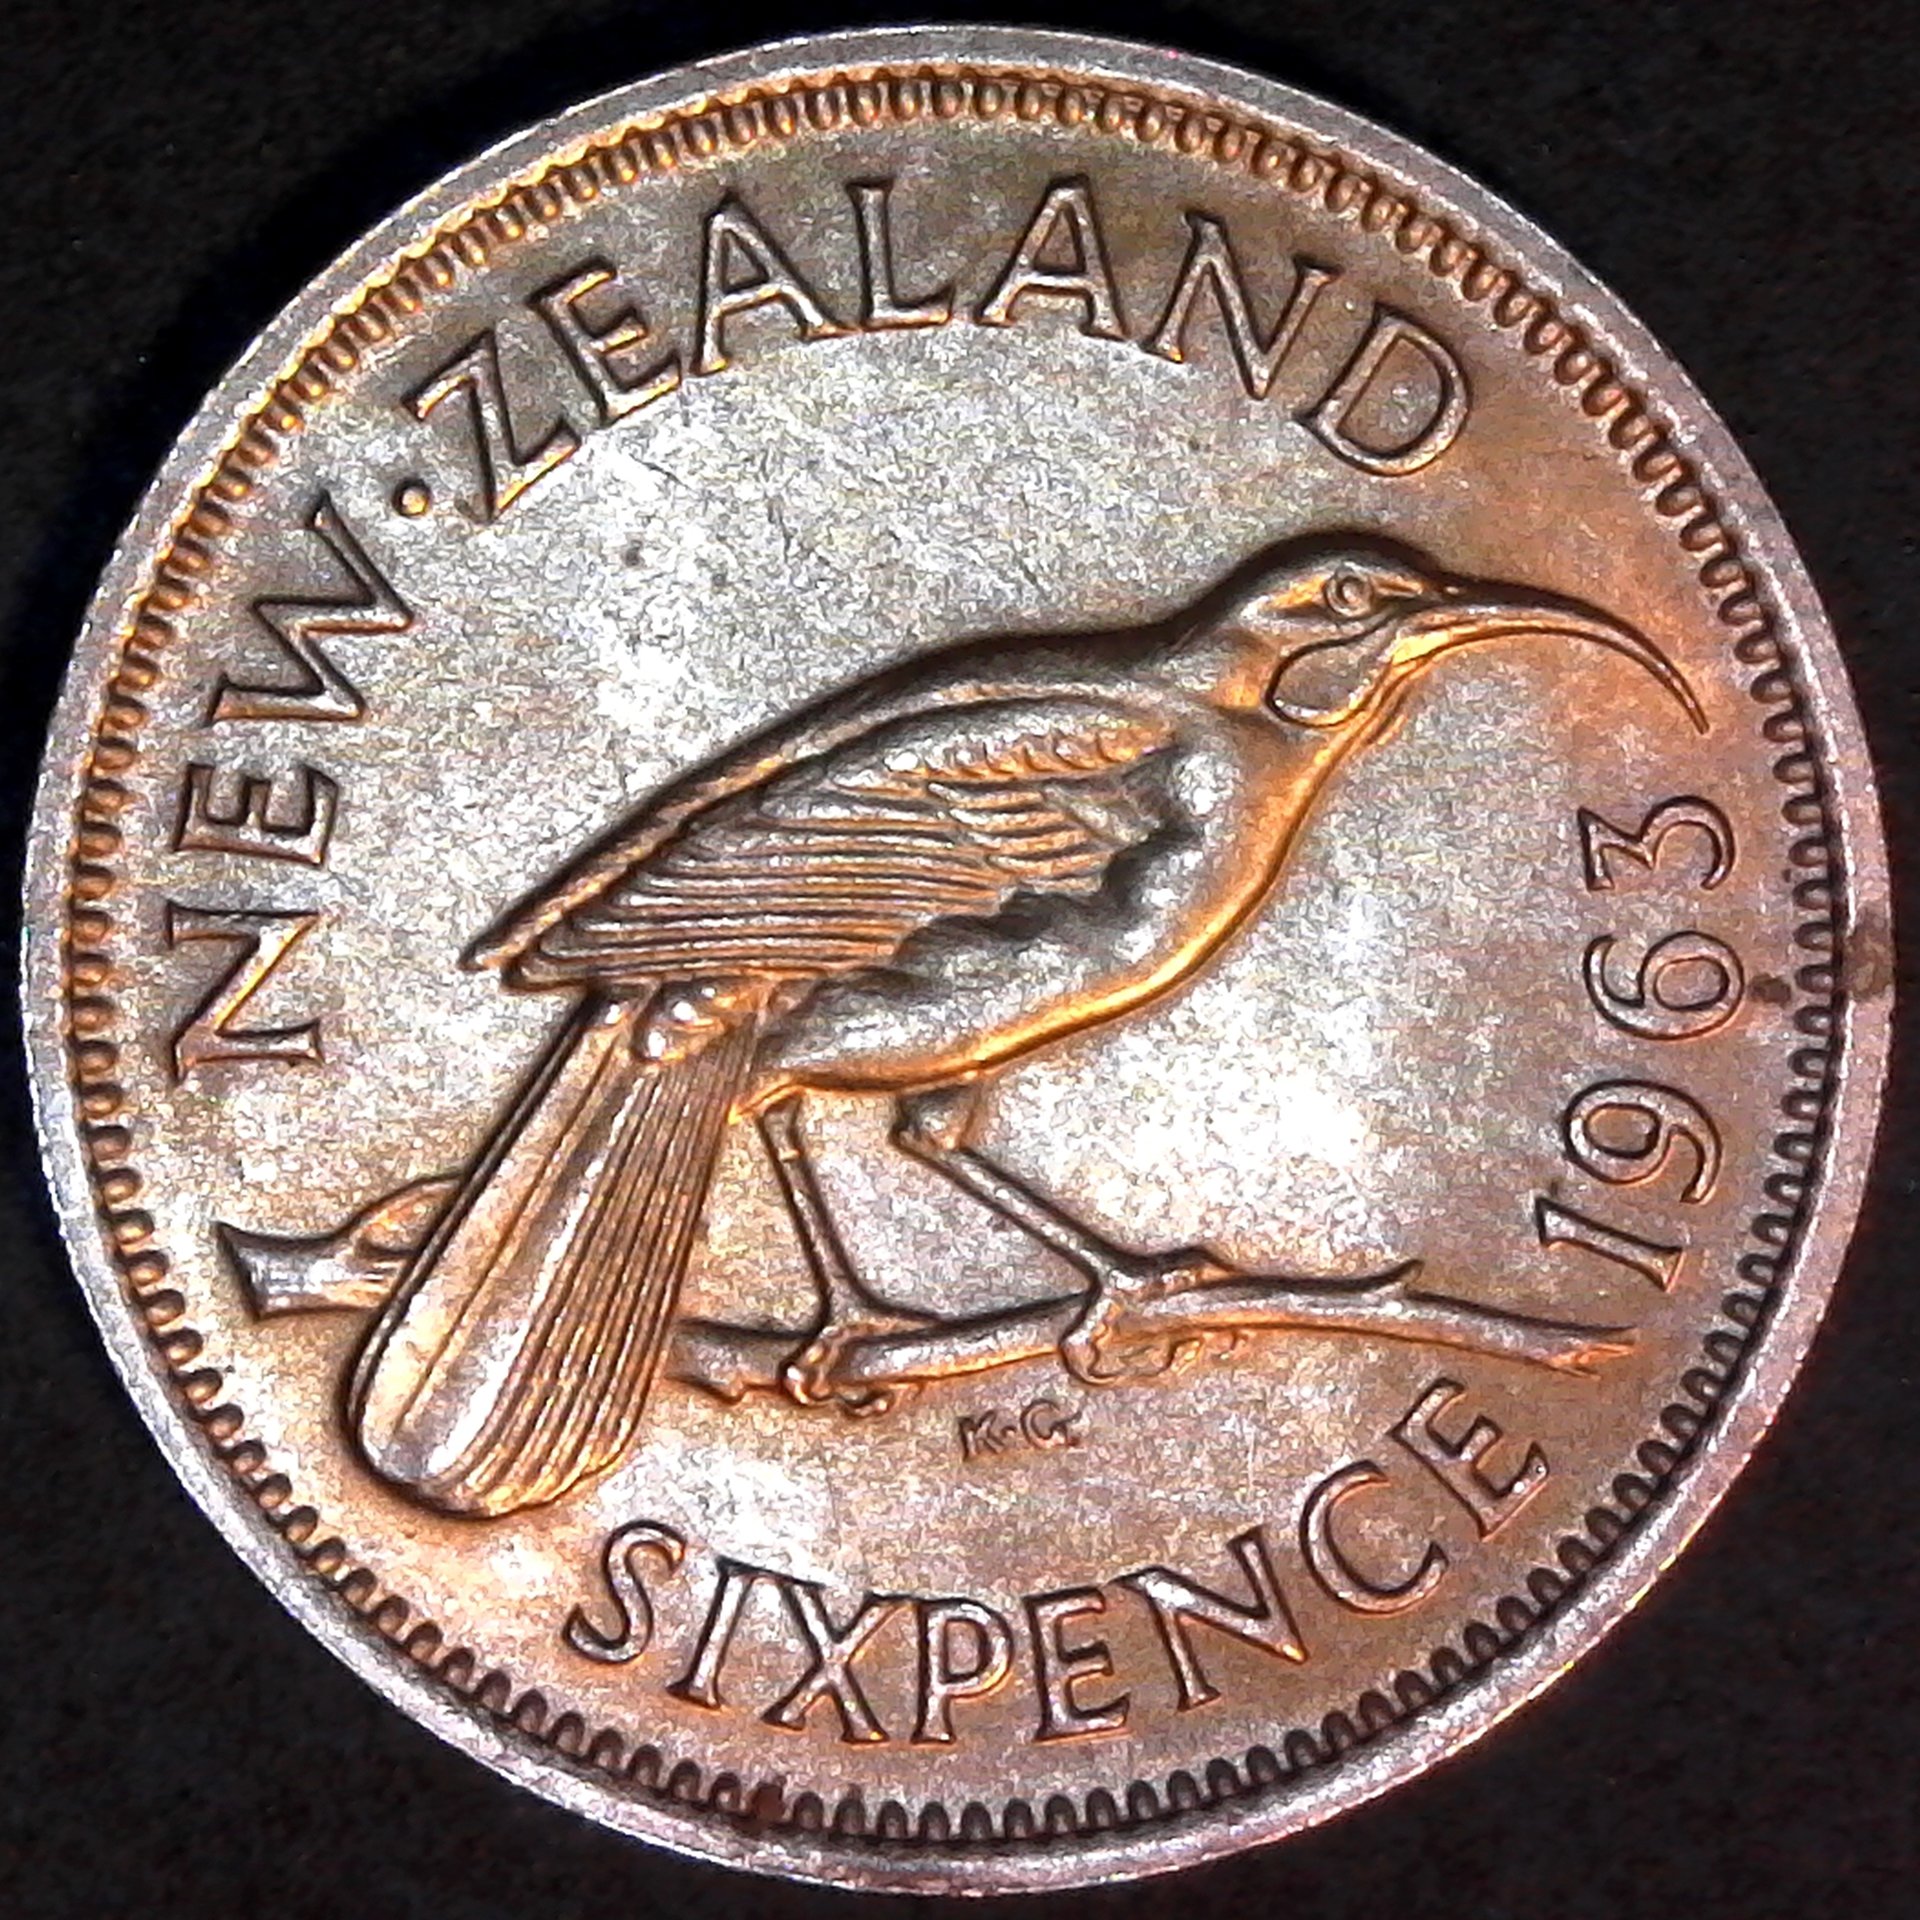 New Zealand Sixpence 1963 rev.jpg